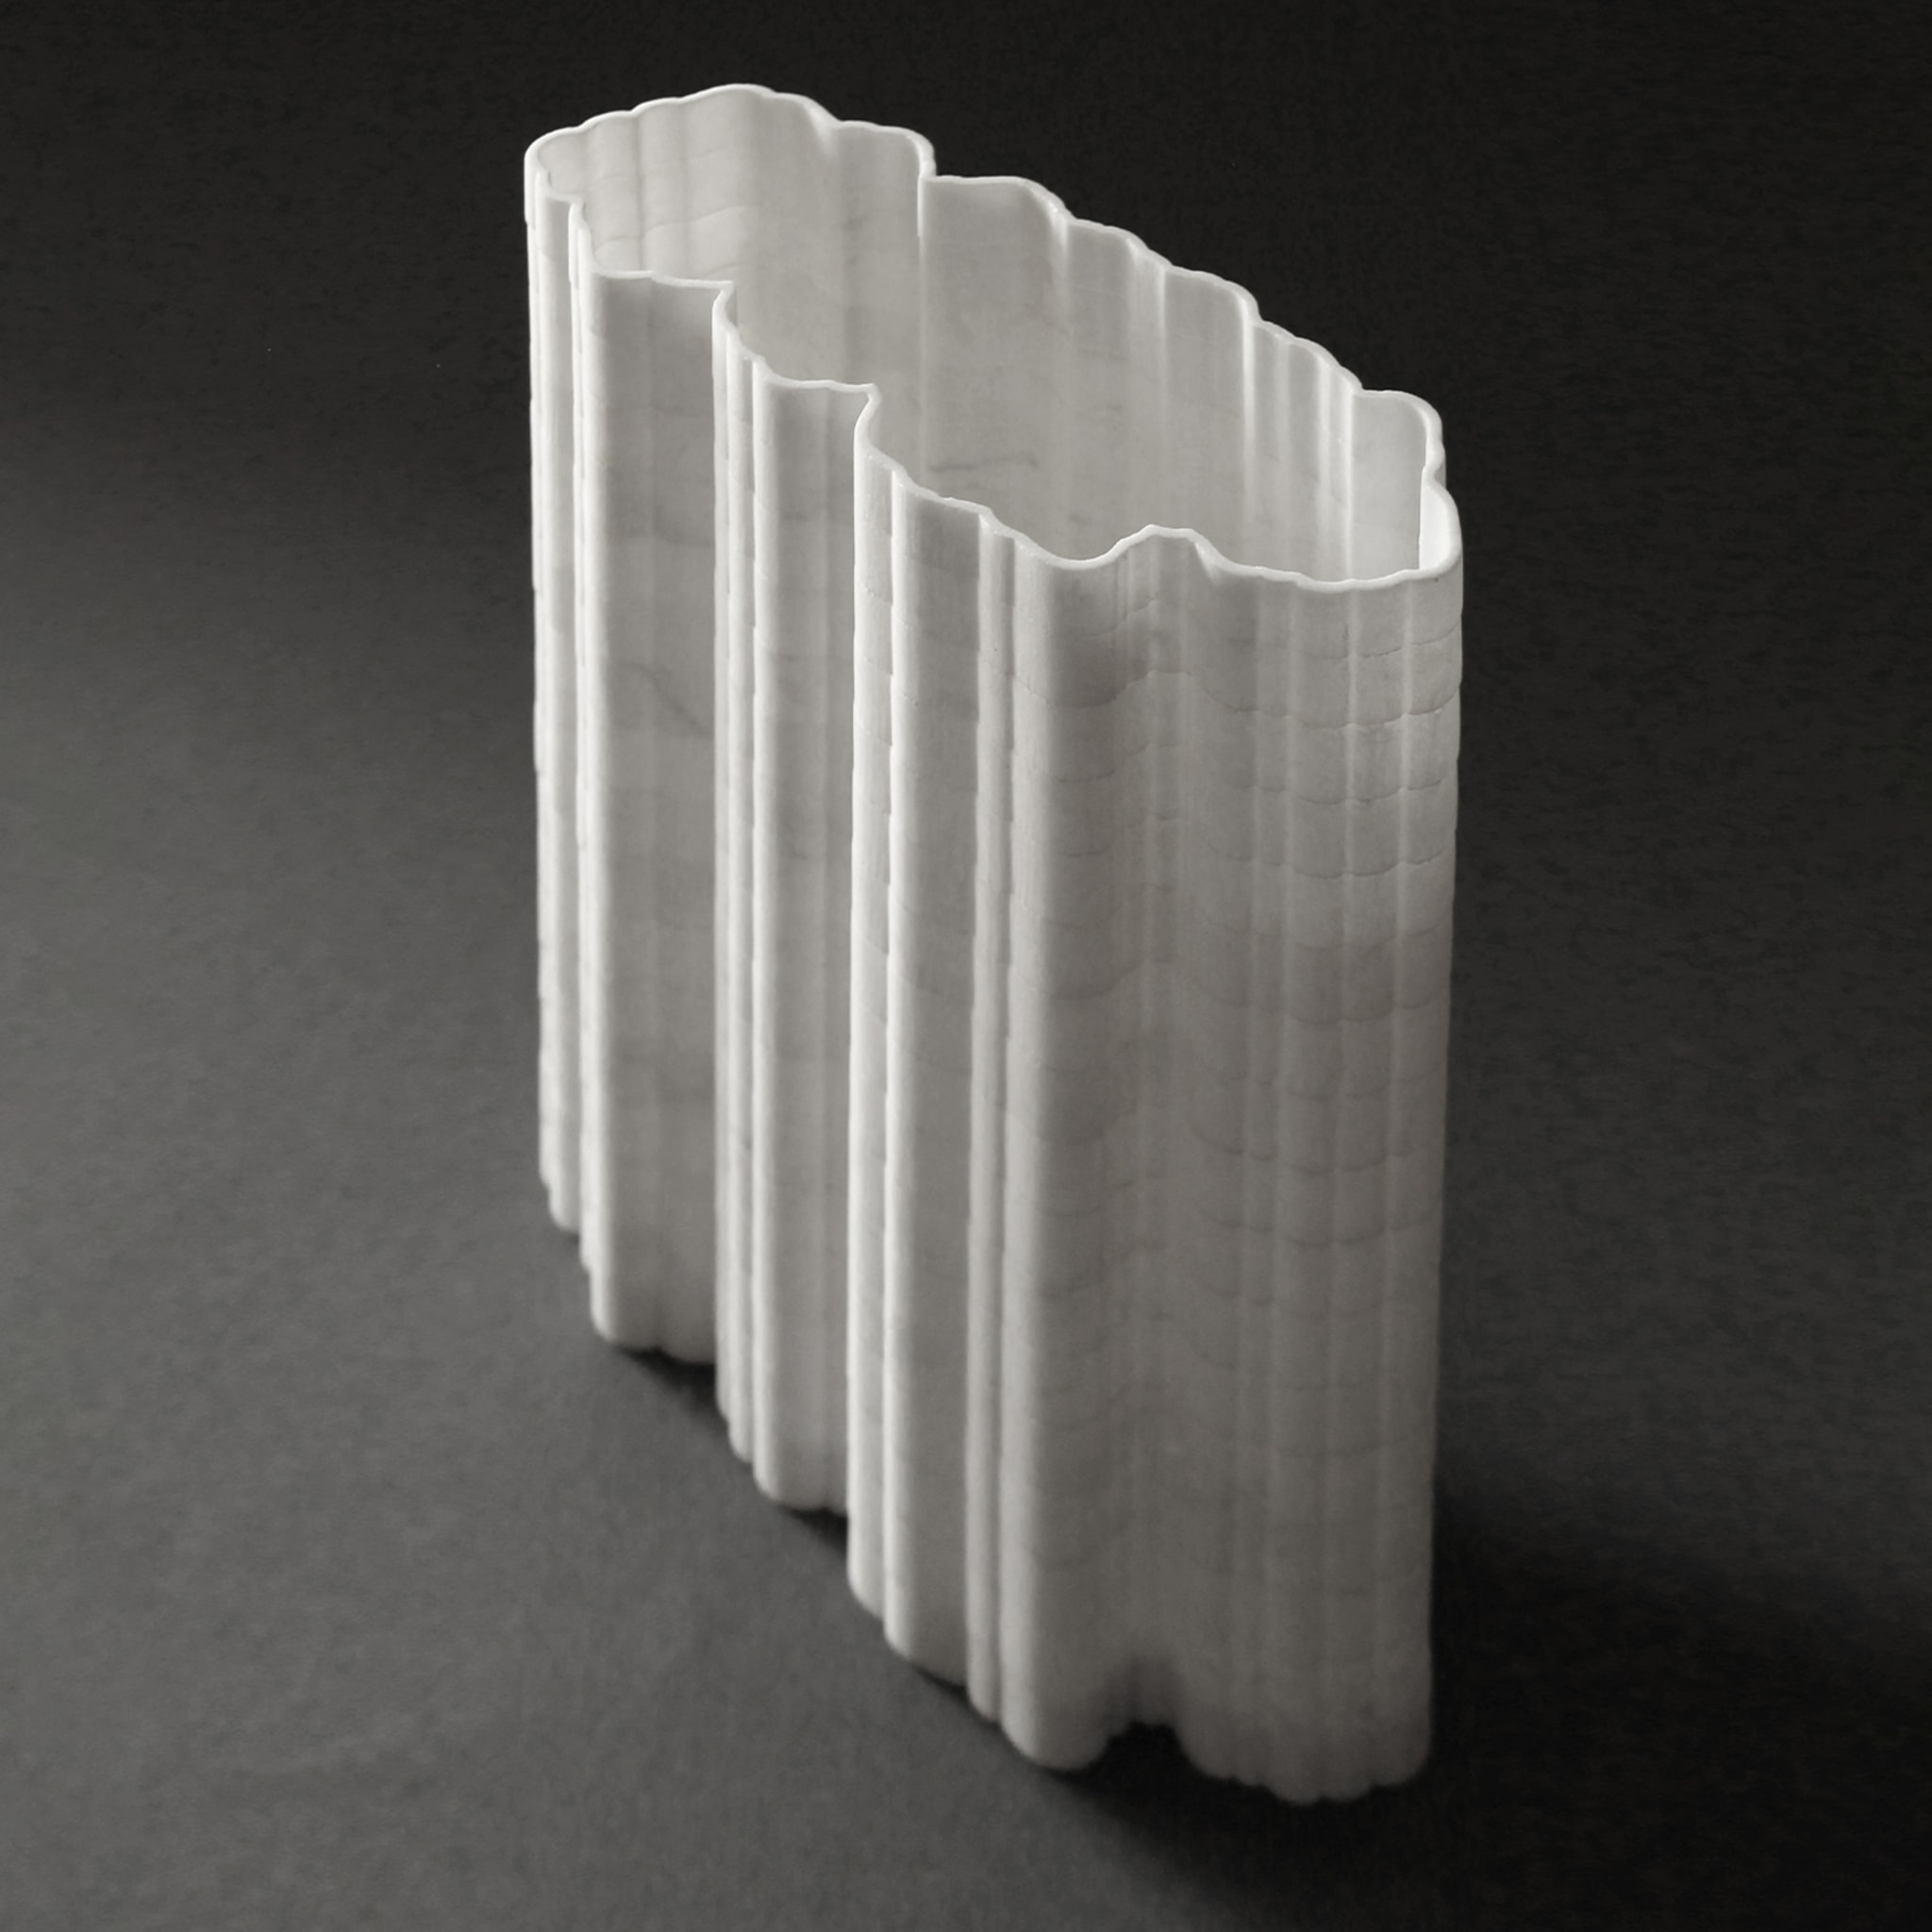 Stripes Vase White Carrara Marble by Paolo Ulian - Alternative view 1